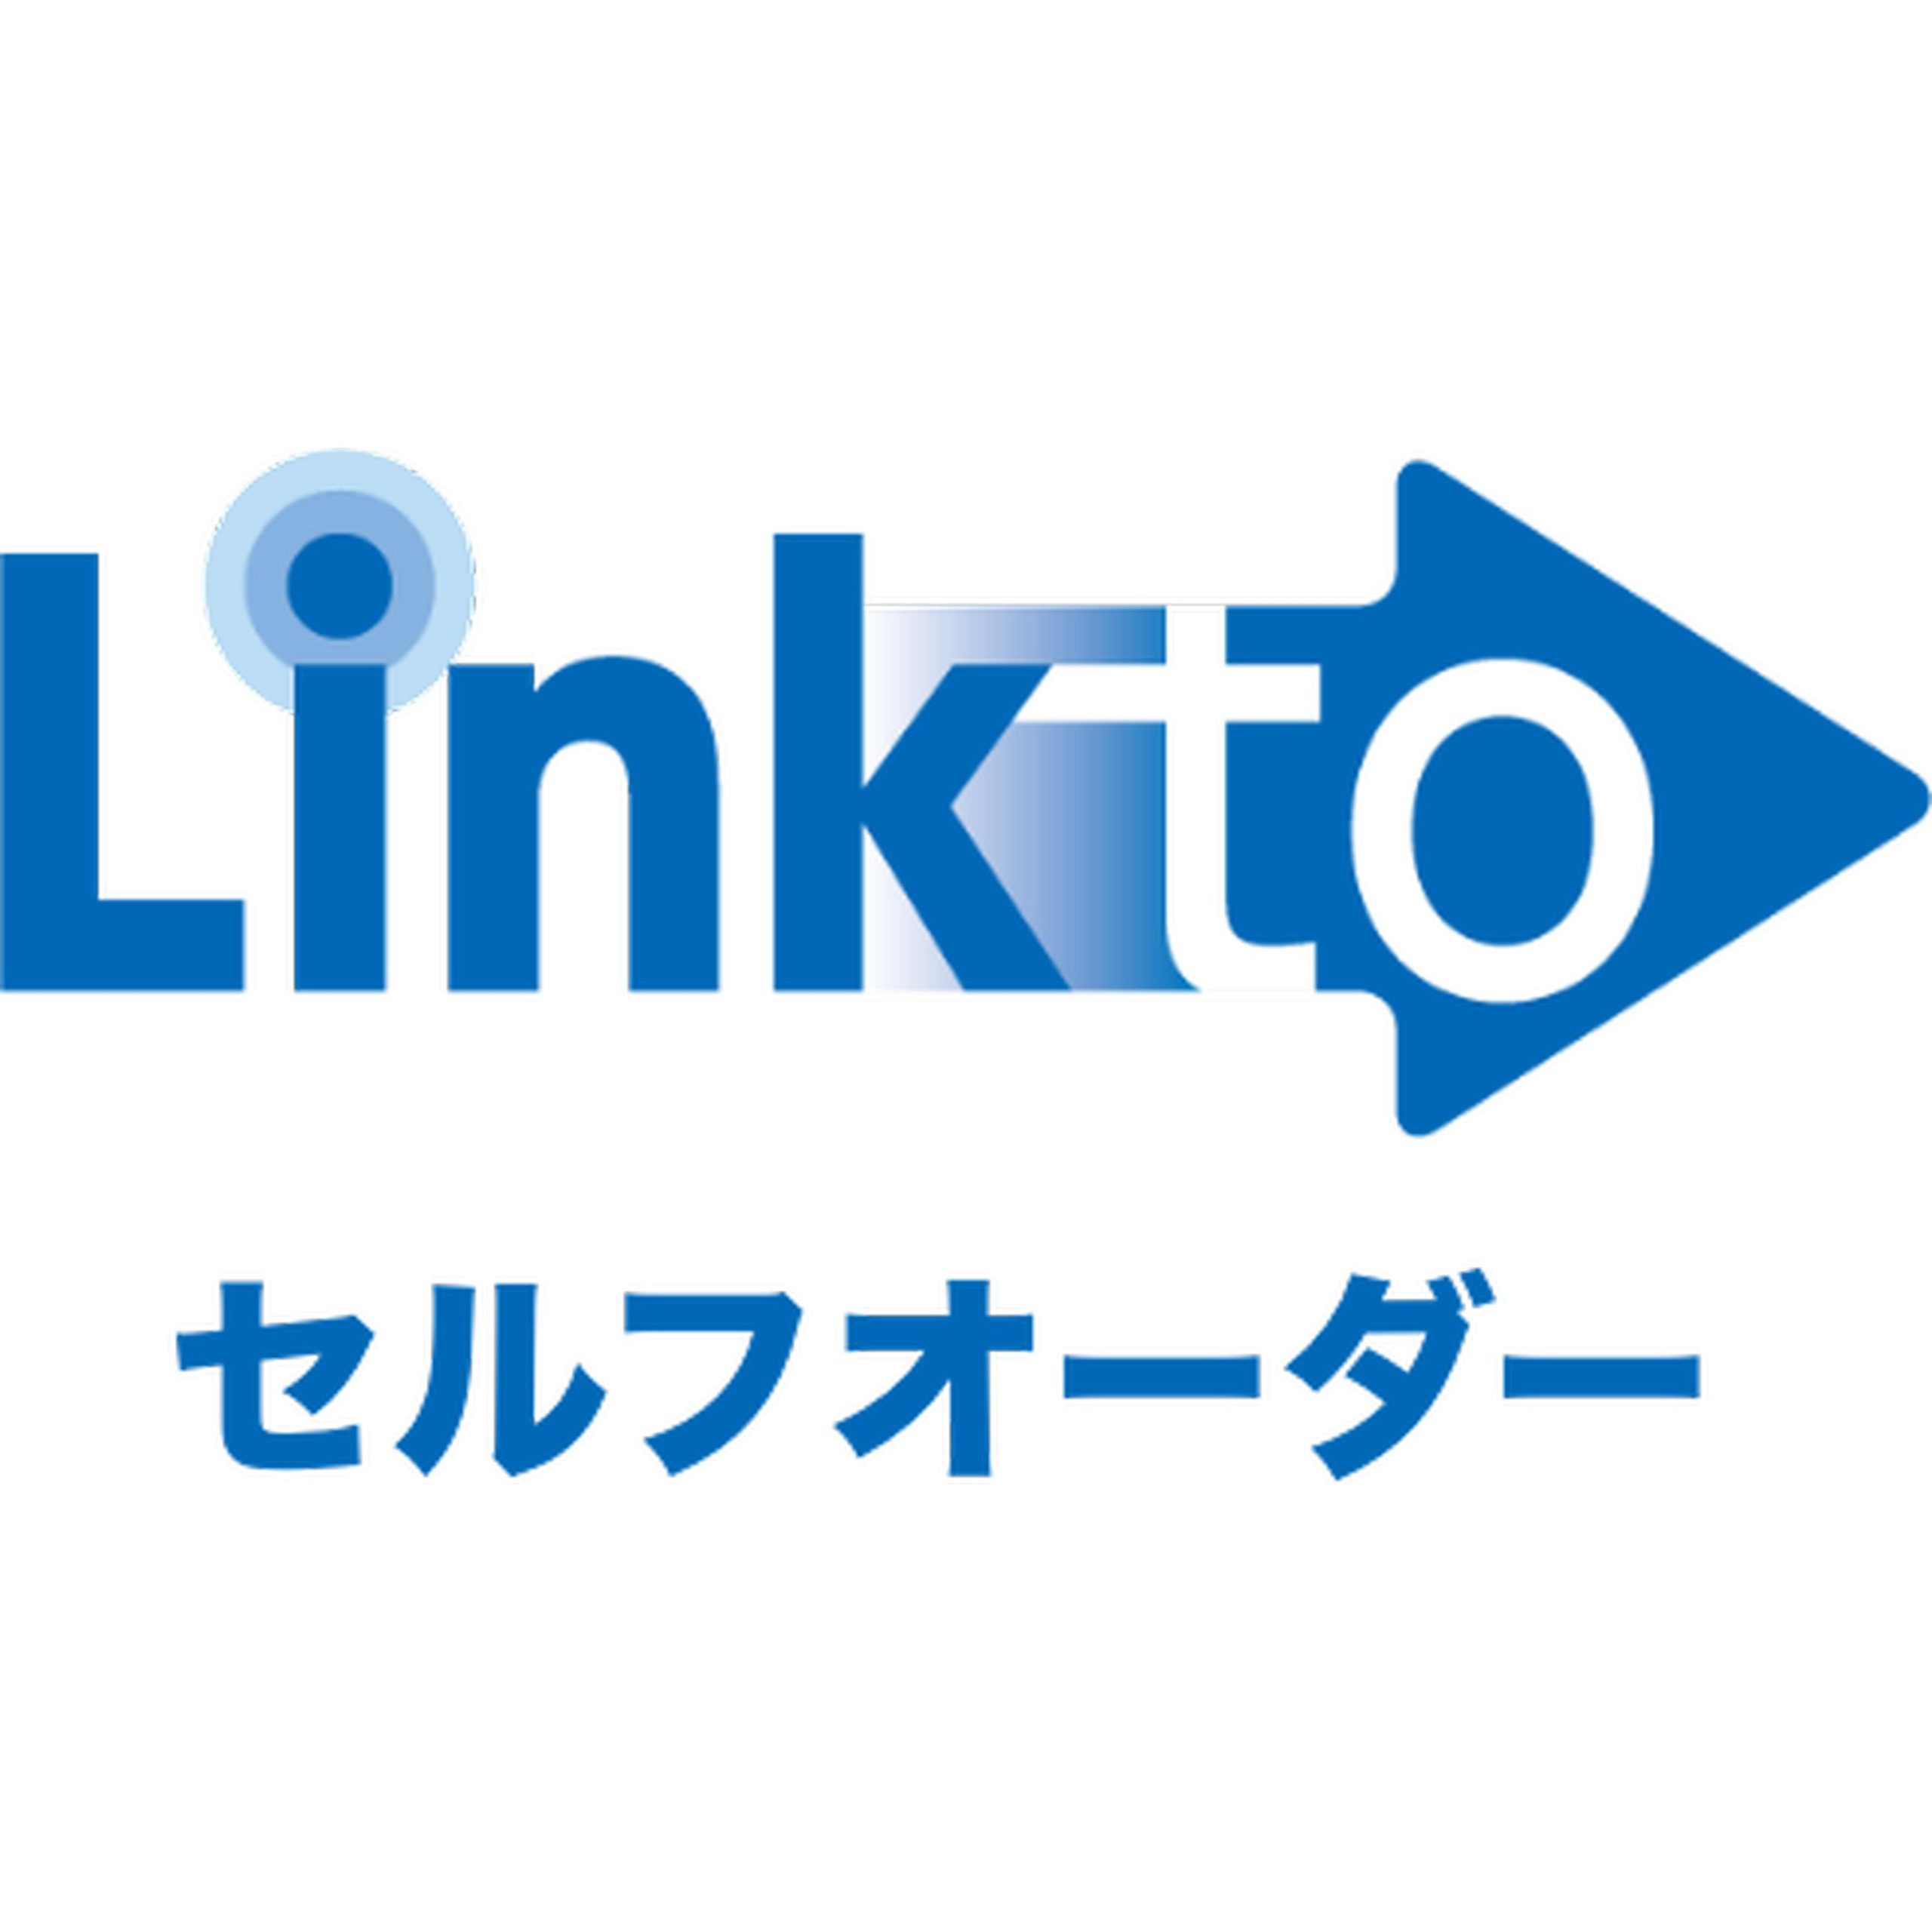 Linkto/セルフオーダー